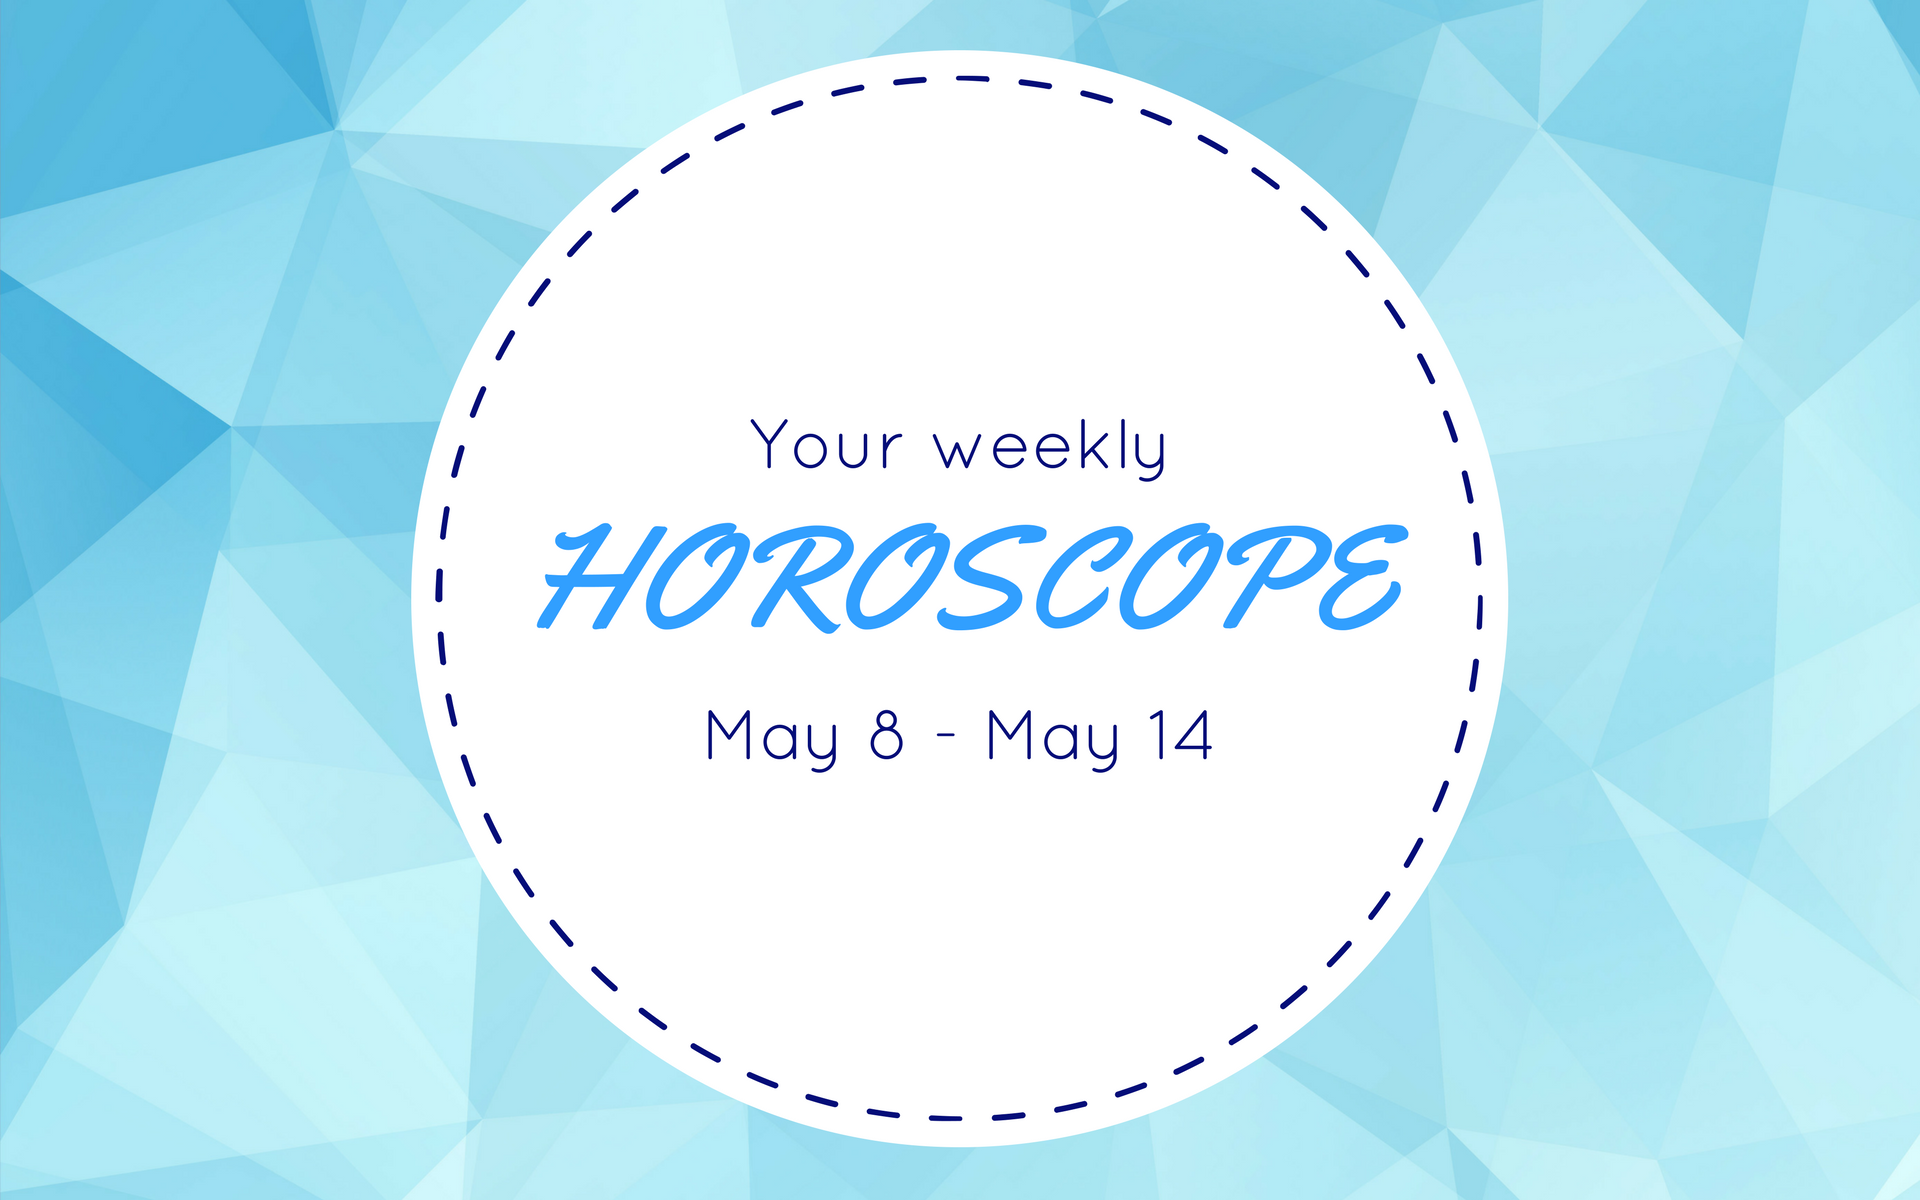 Your Weekly Horoscope: May 8 - May 14